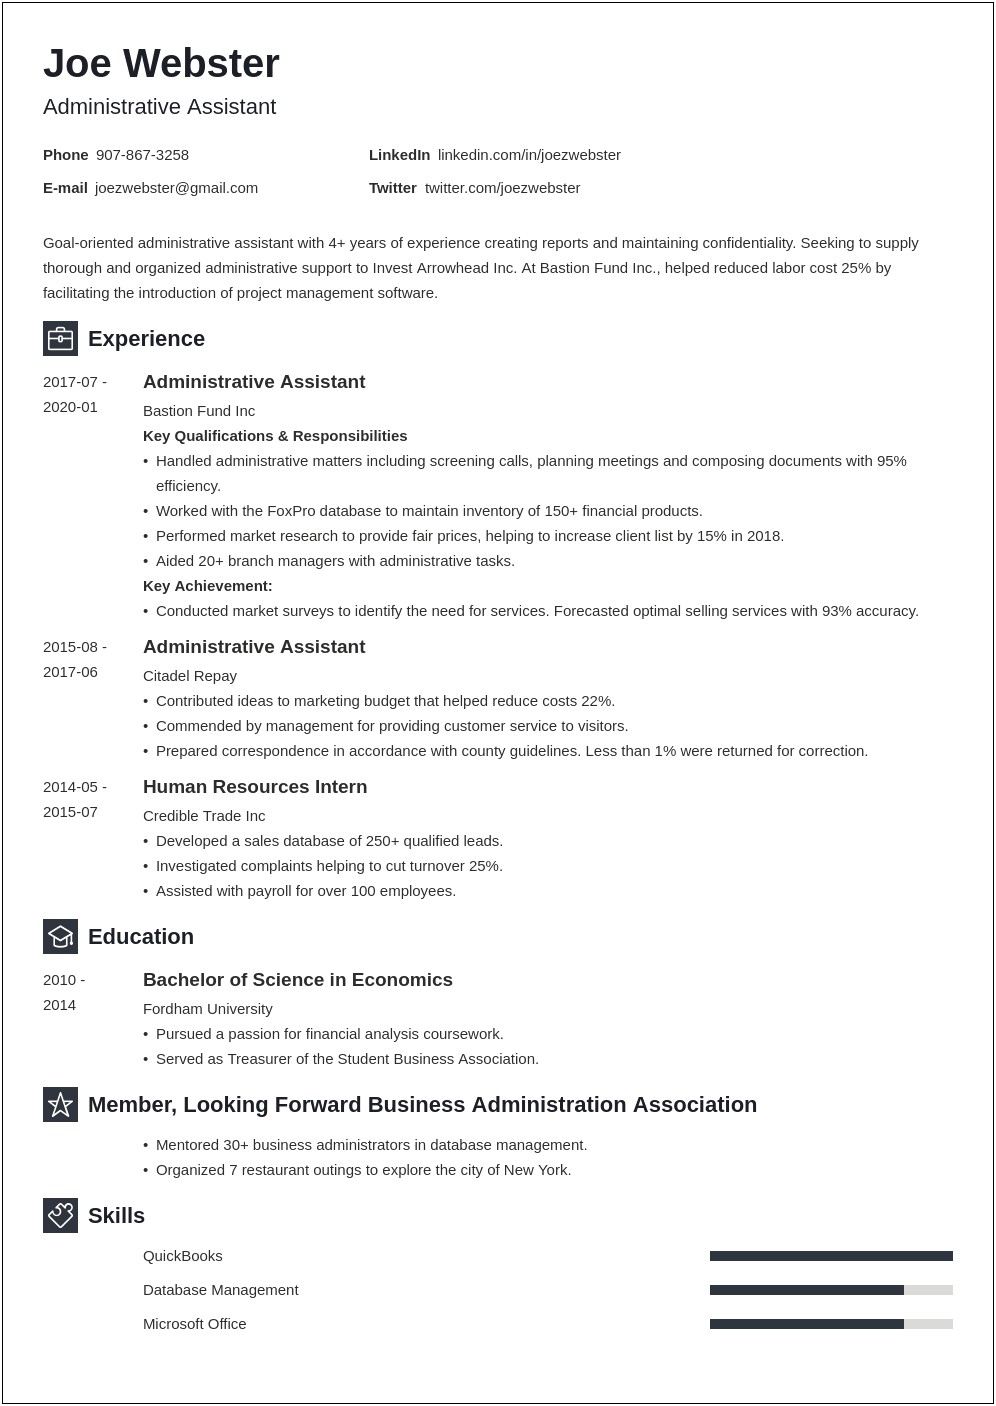 Business Administration Associates De Resume Objective